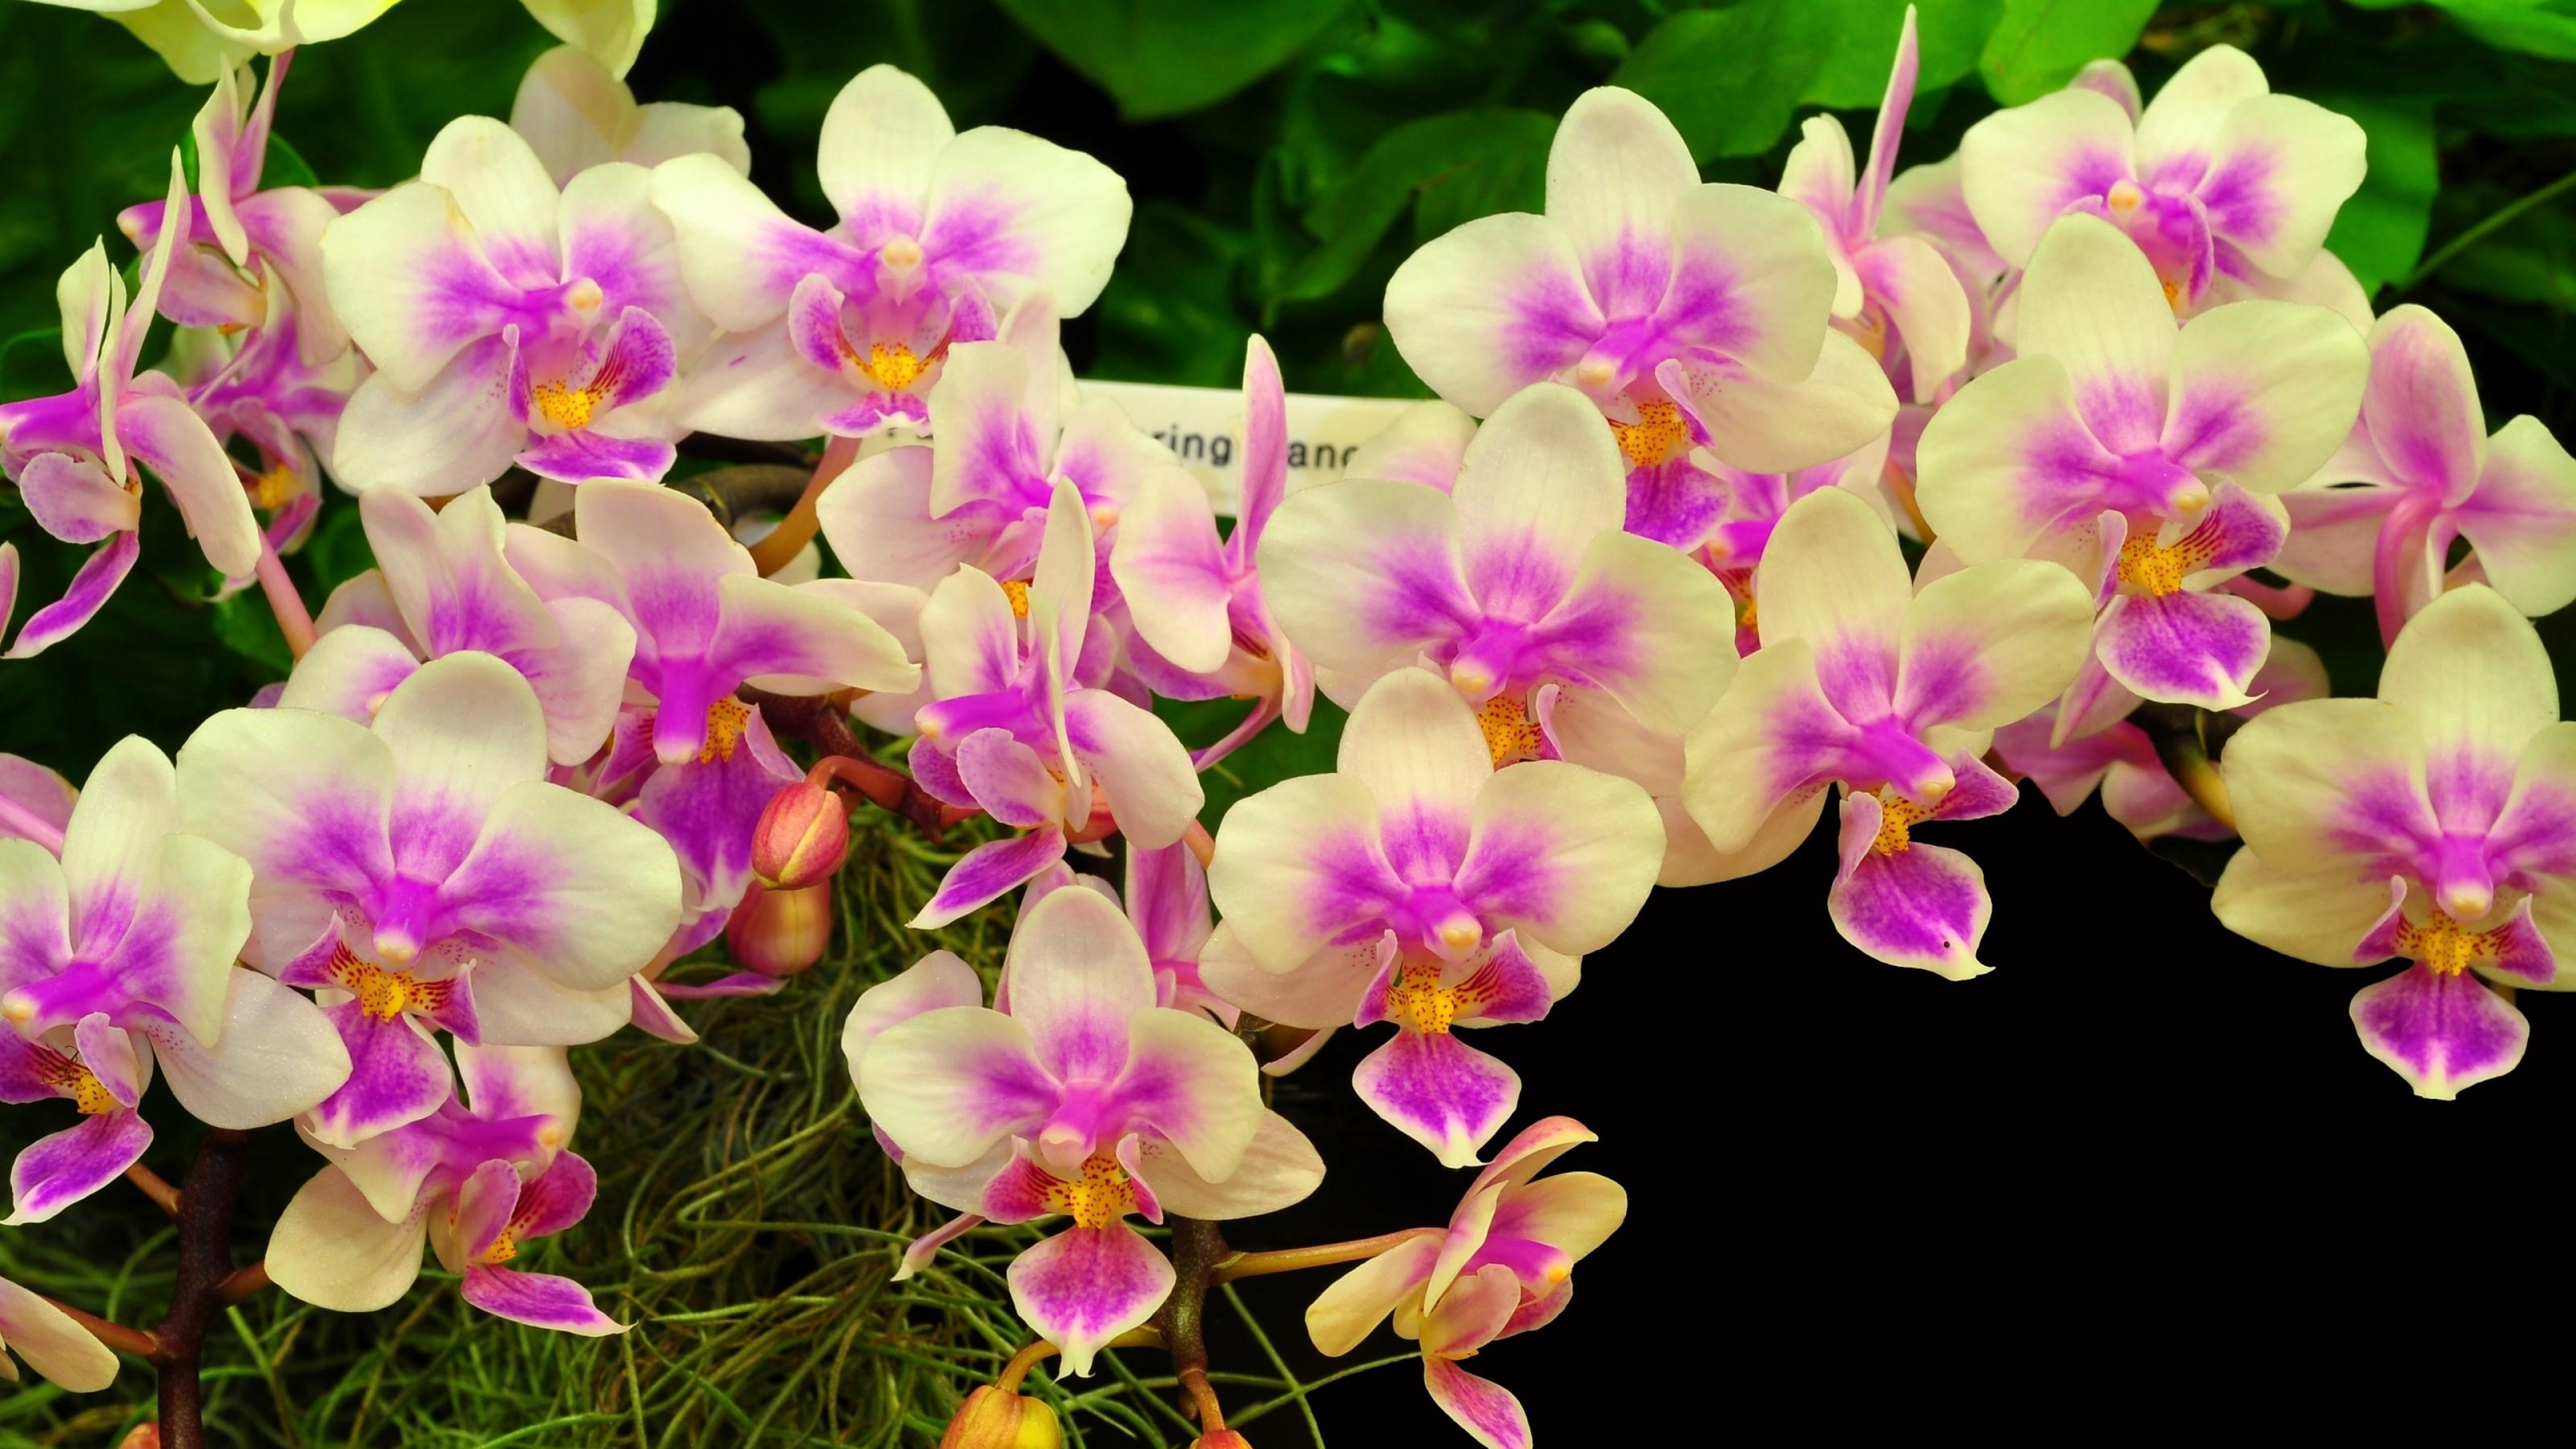 Flowers orchids. Орхидея фаленопсис Сансет. Орхидея фаленопсис Каскад. Орхидея мультифлора. Сансет лав Орхидея.